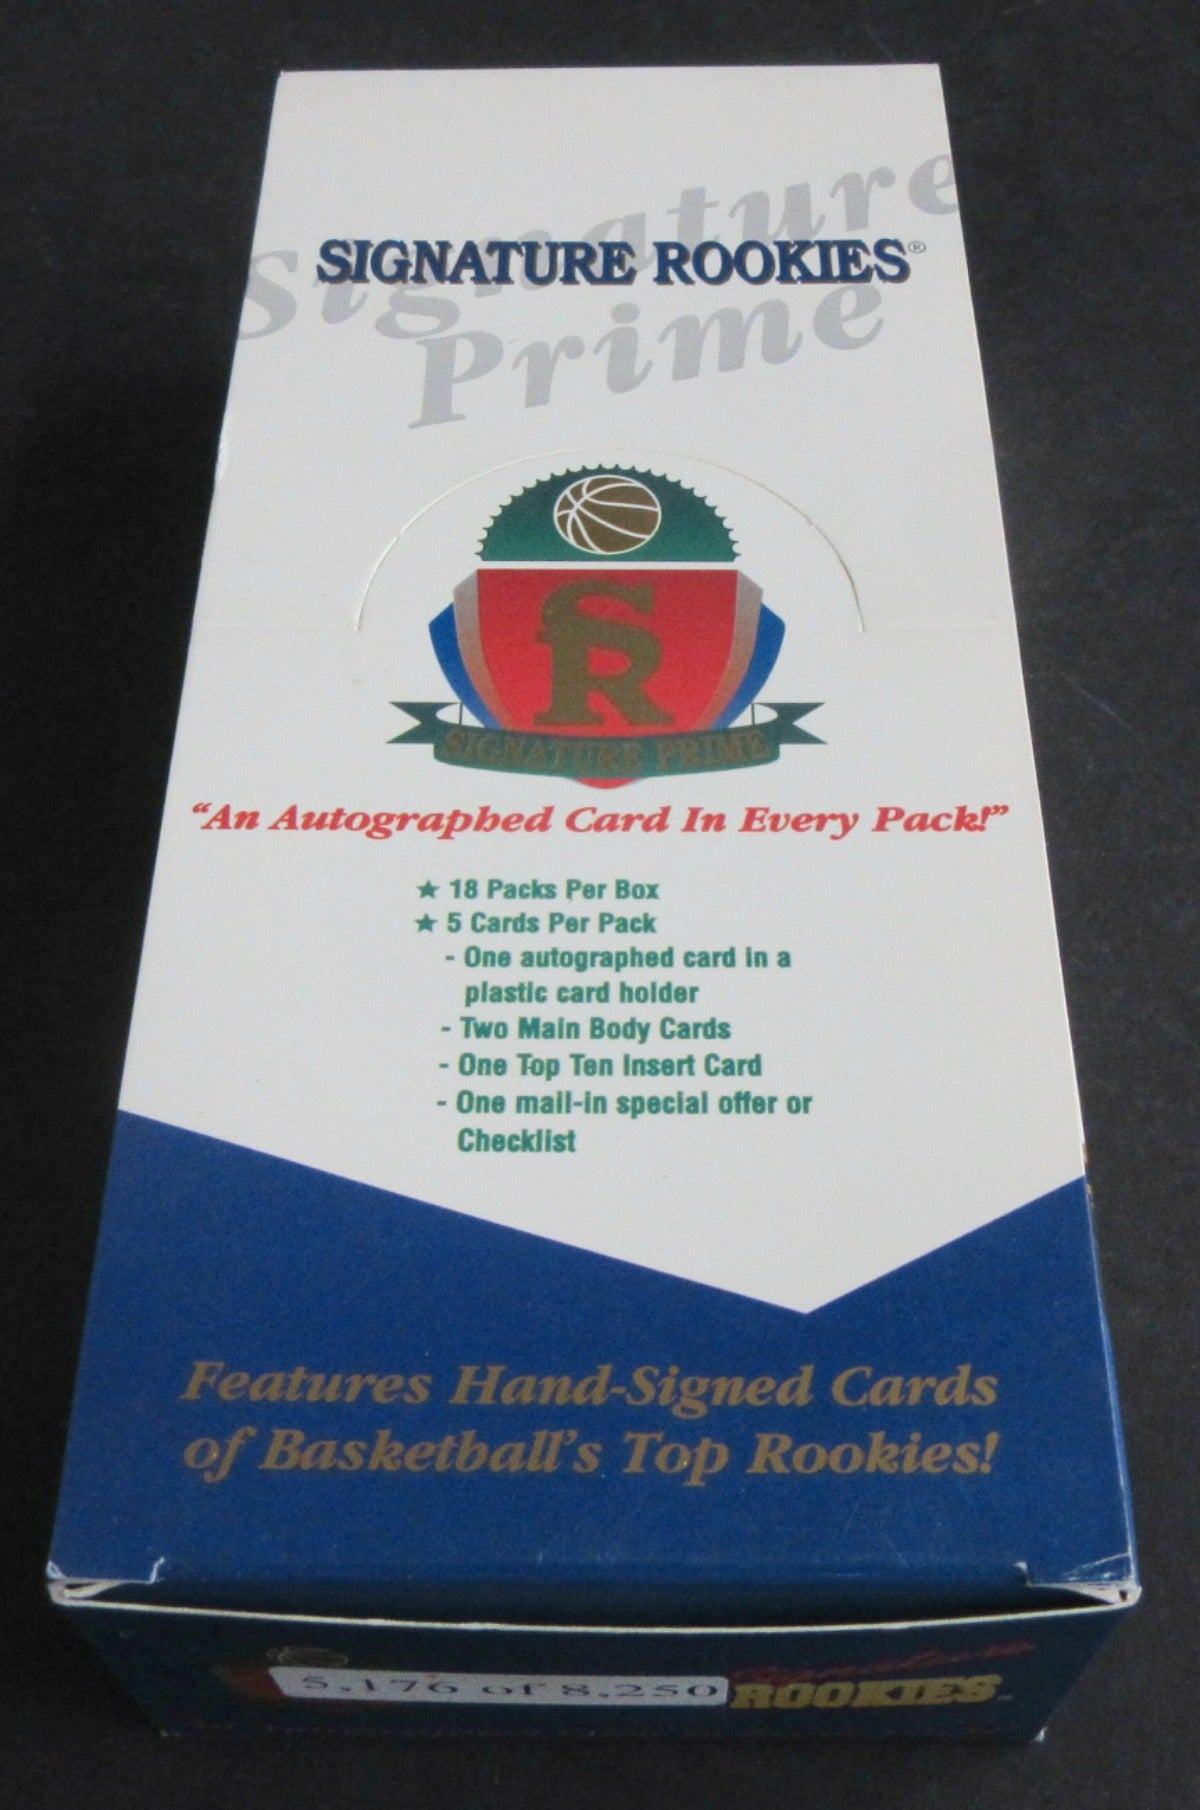 1995 Signature Rookies Signature Prime Basketball Box